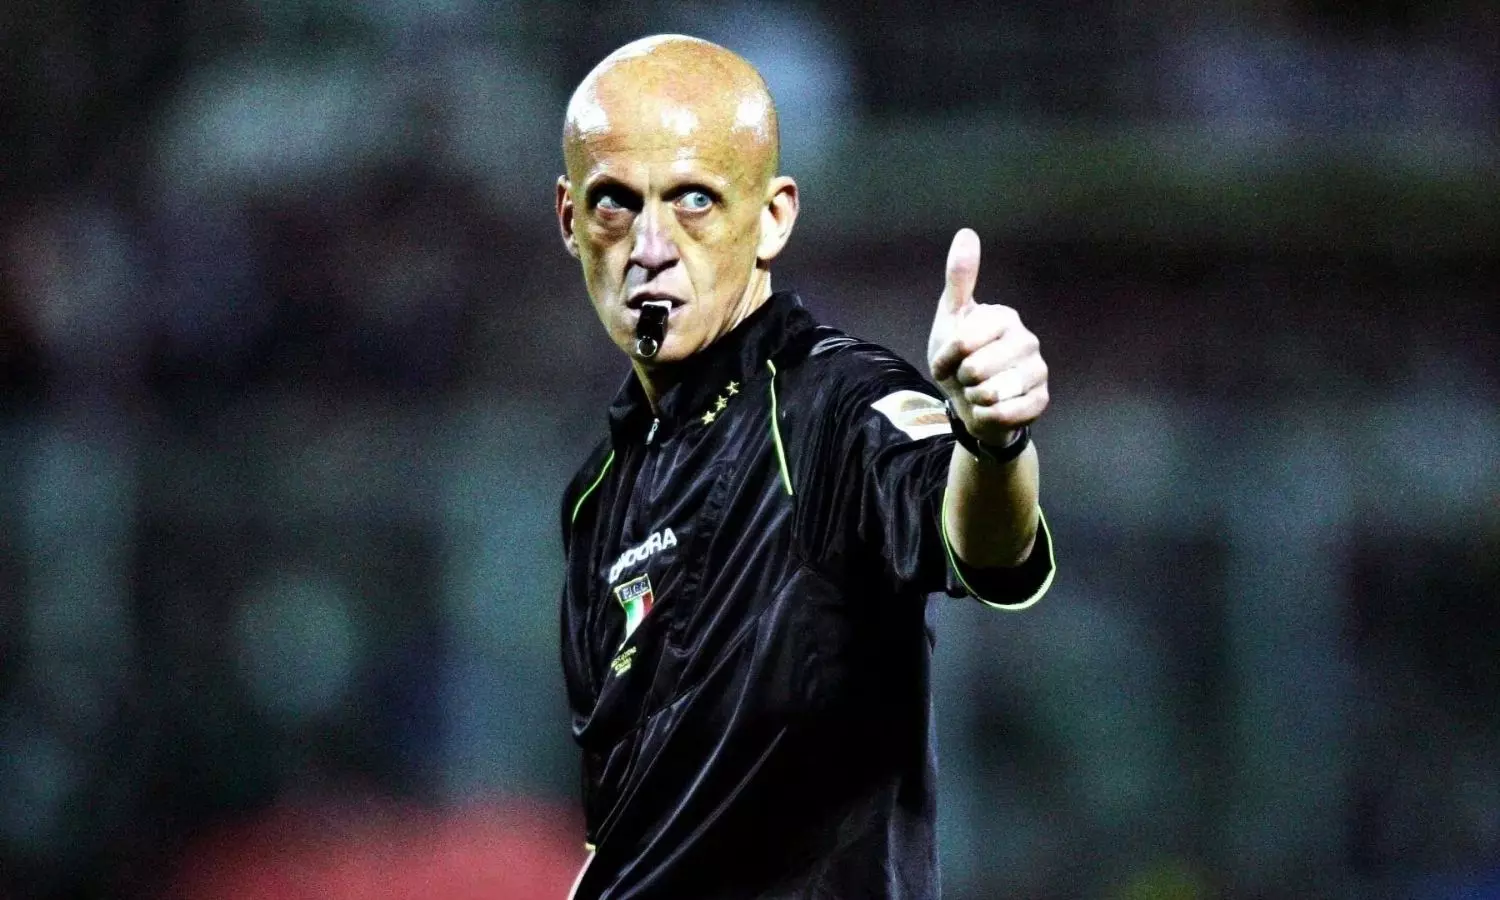 Referee great Pierluigi Collina says Manchester United's 1999